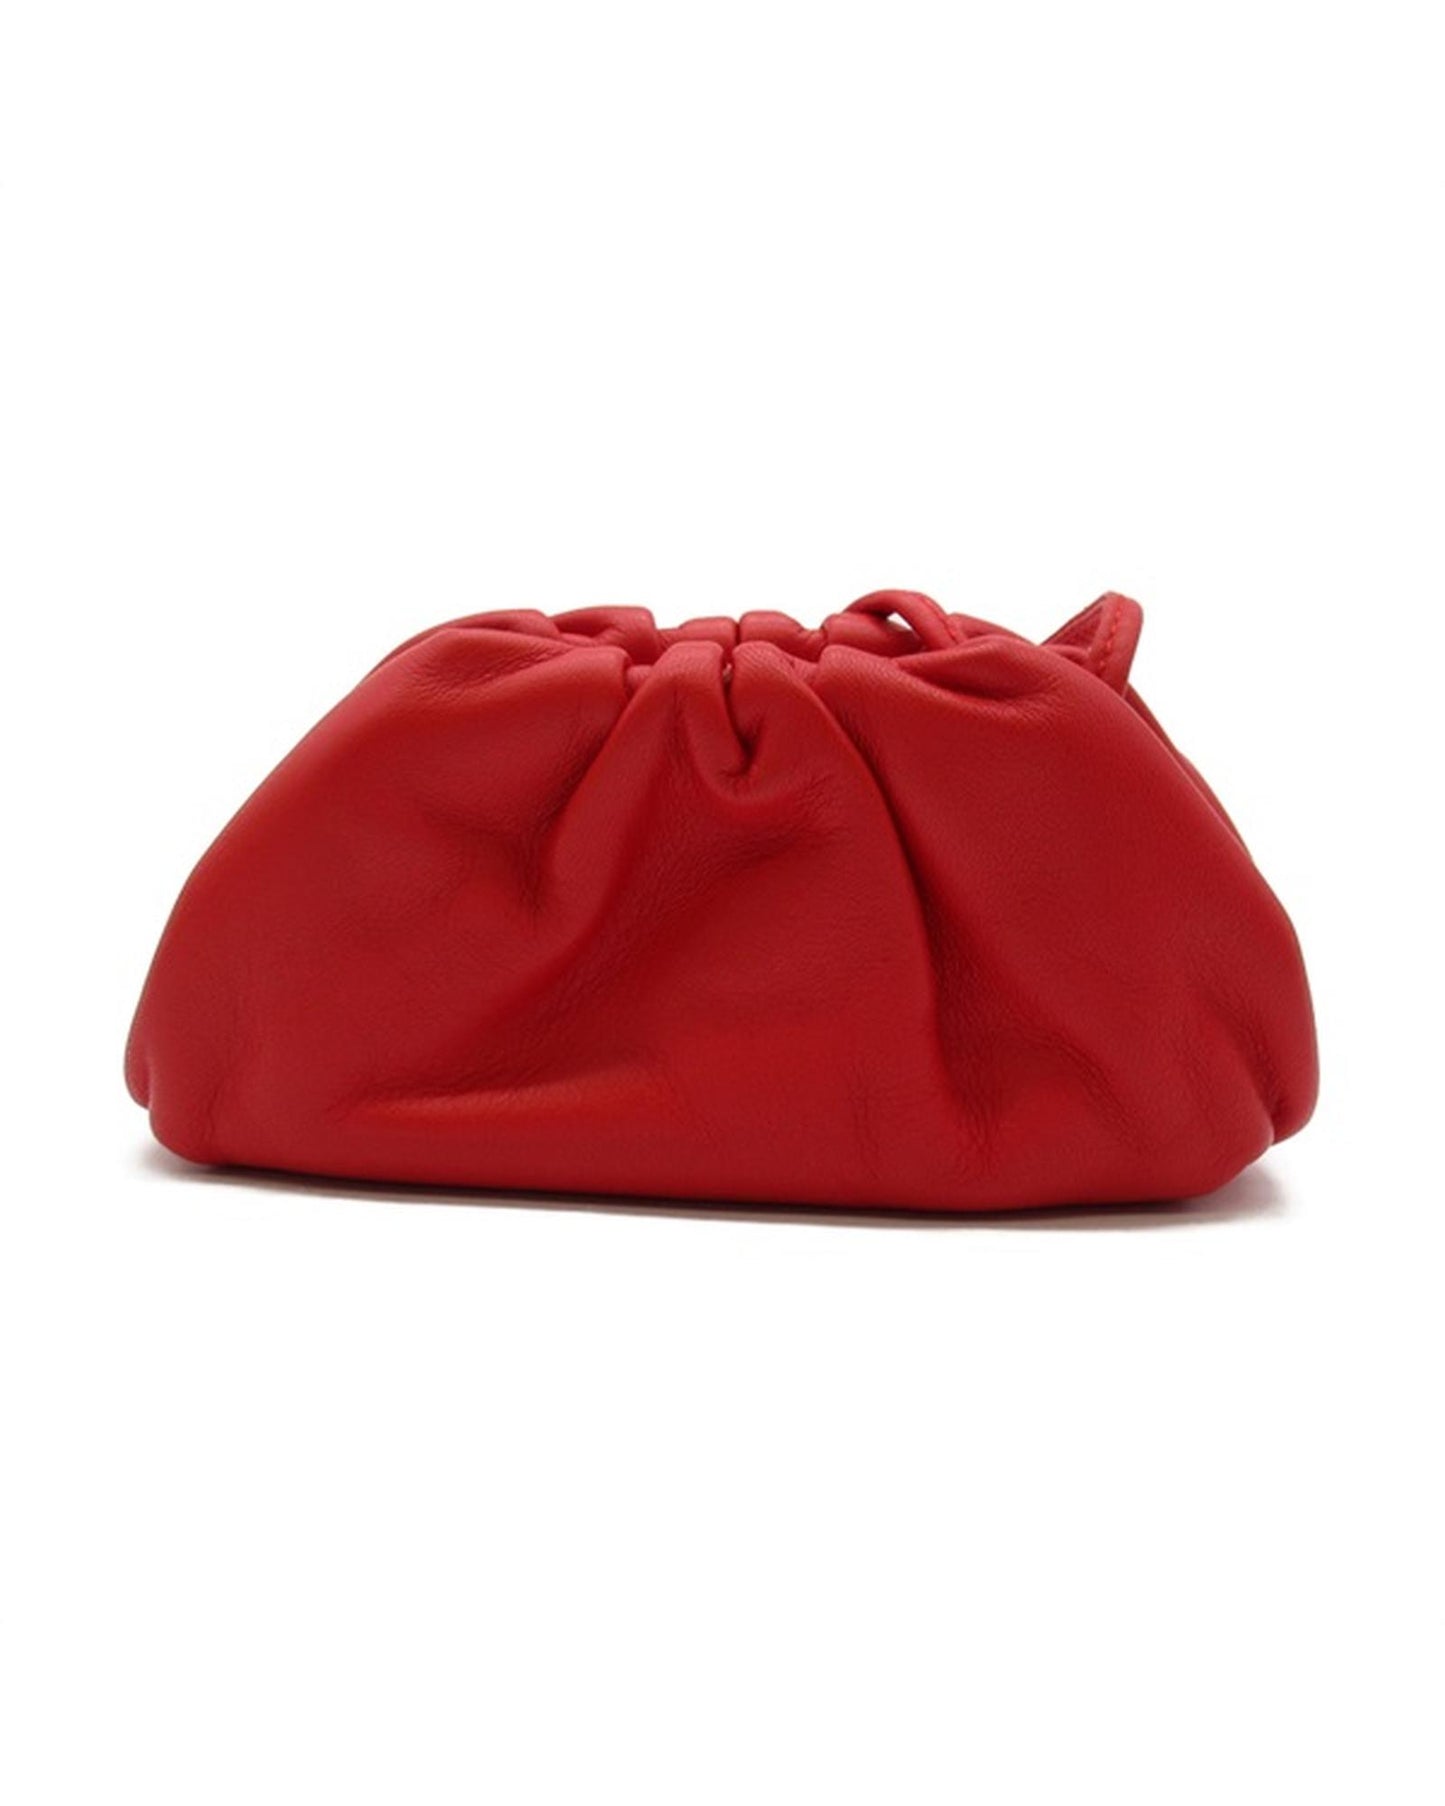 Bottega Veneta Women's Leather Pouch Bag in Red